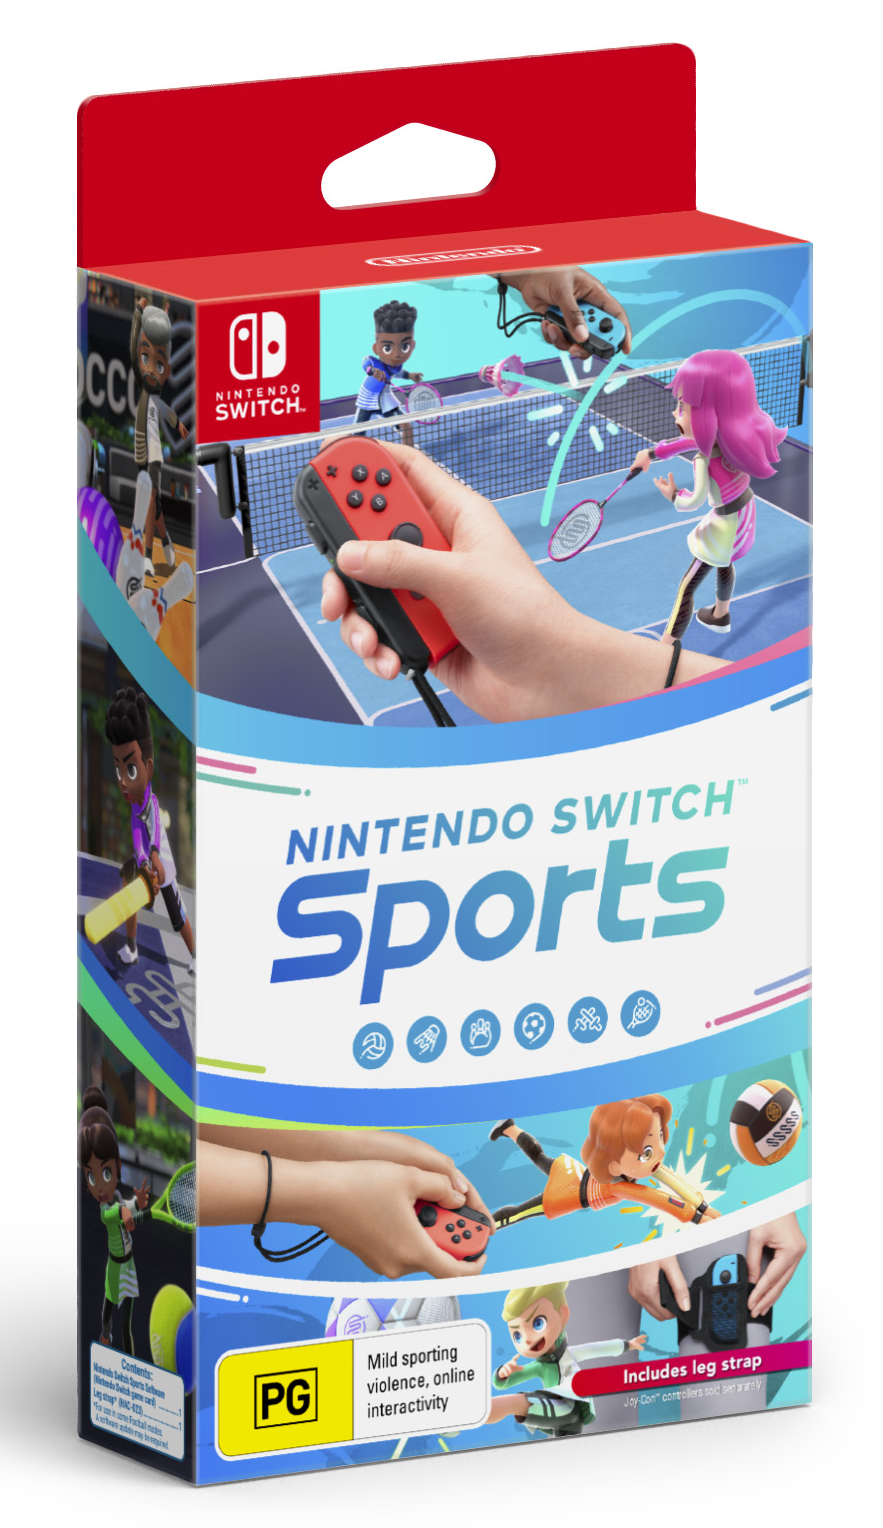 Nintendo Switch Sports - Includes Leg Strap (Nintendo Switch)